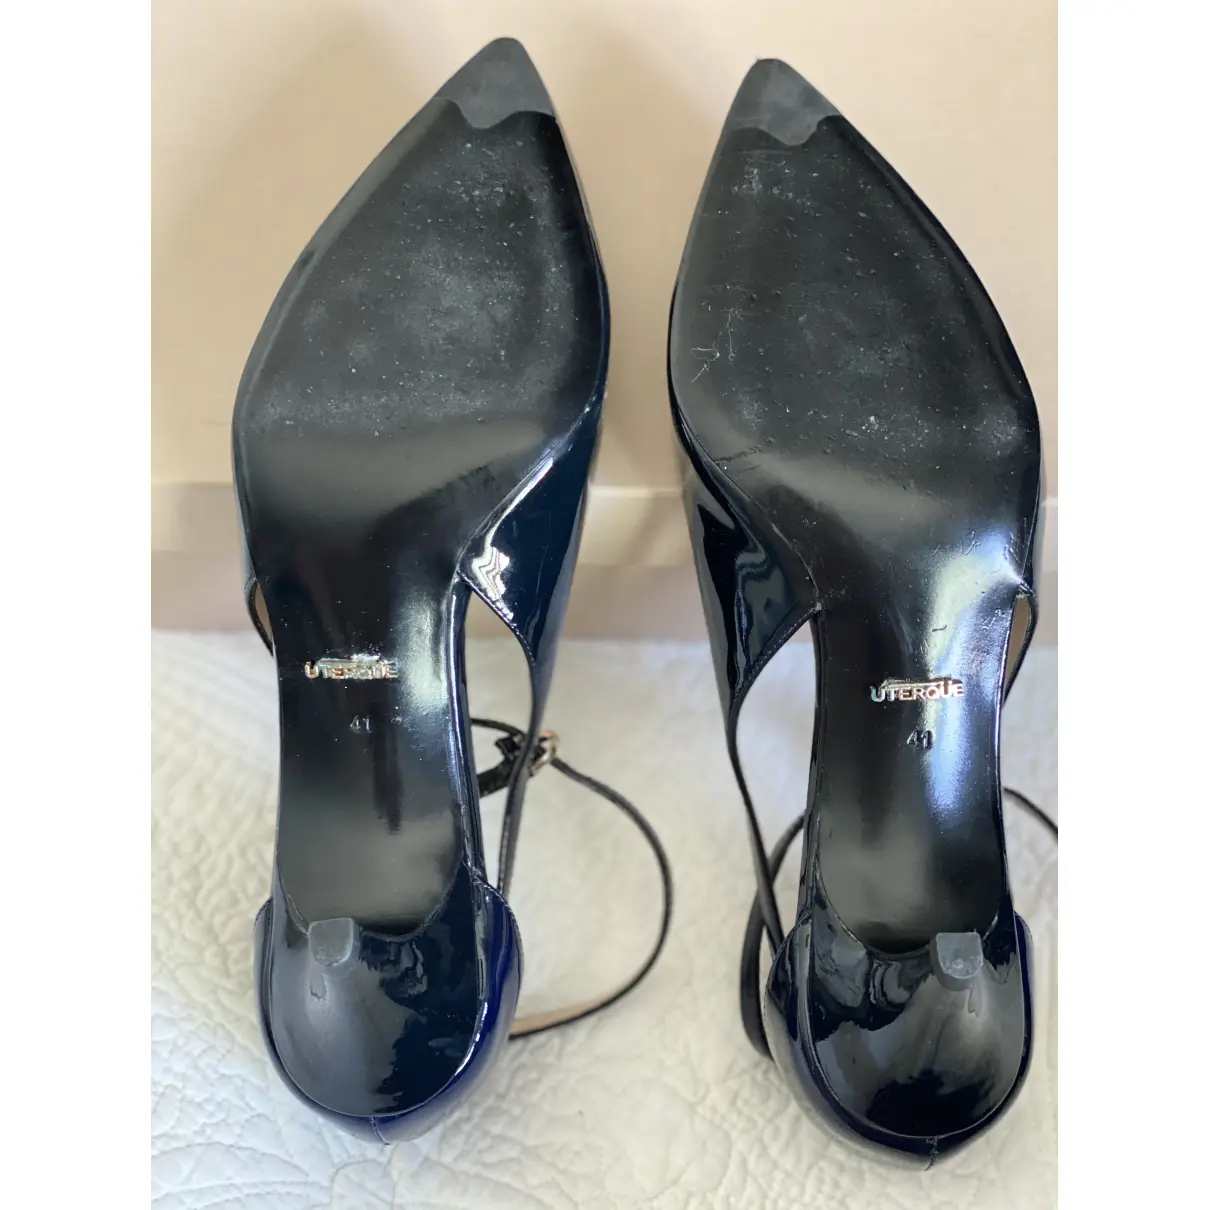 Patent leather heels Uterque